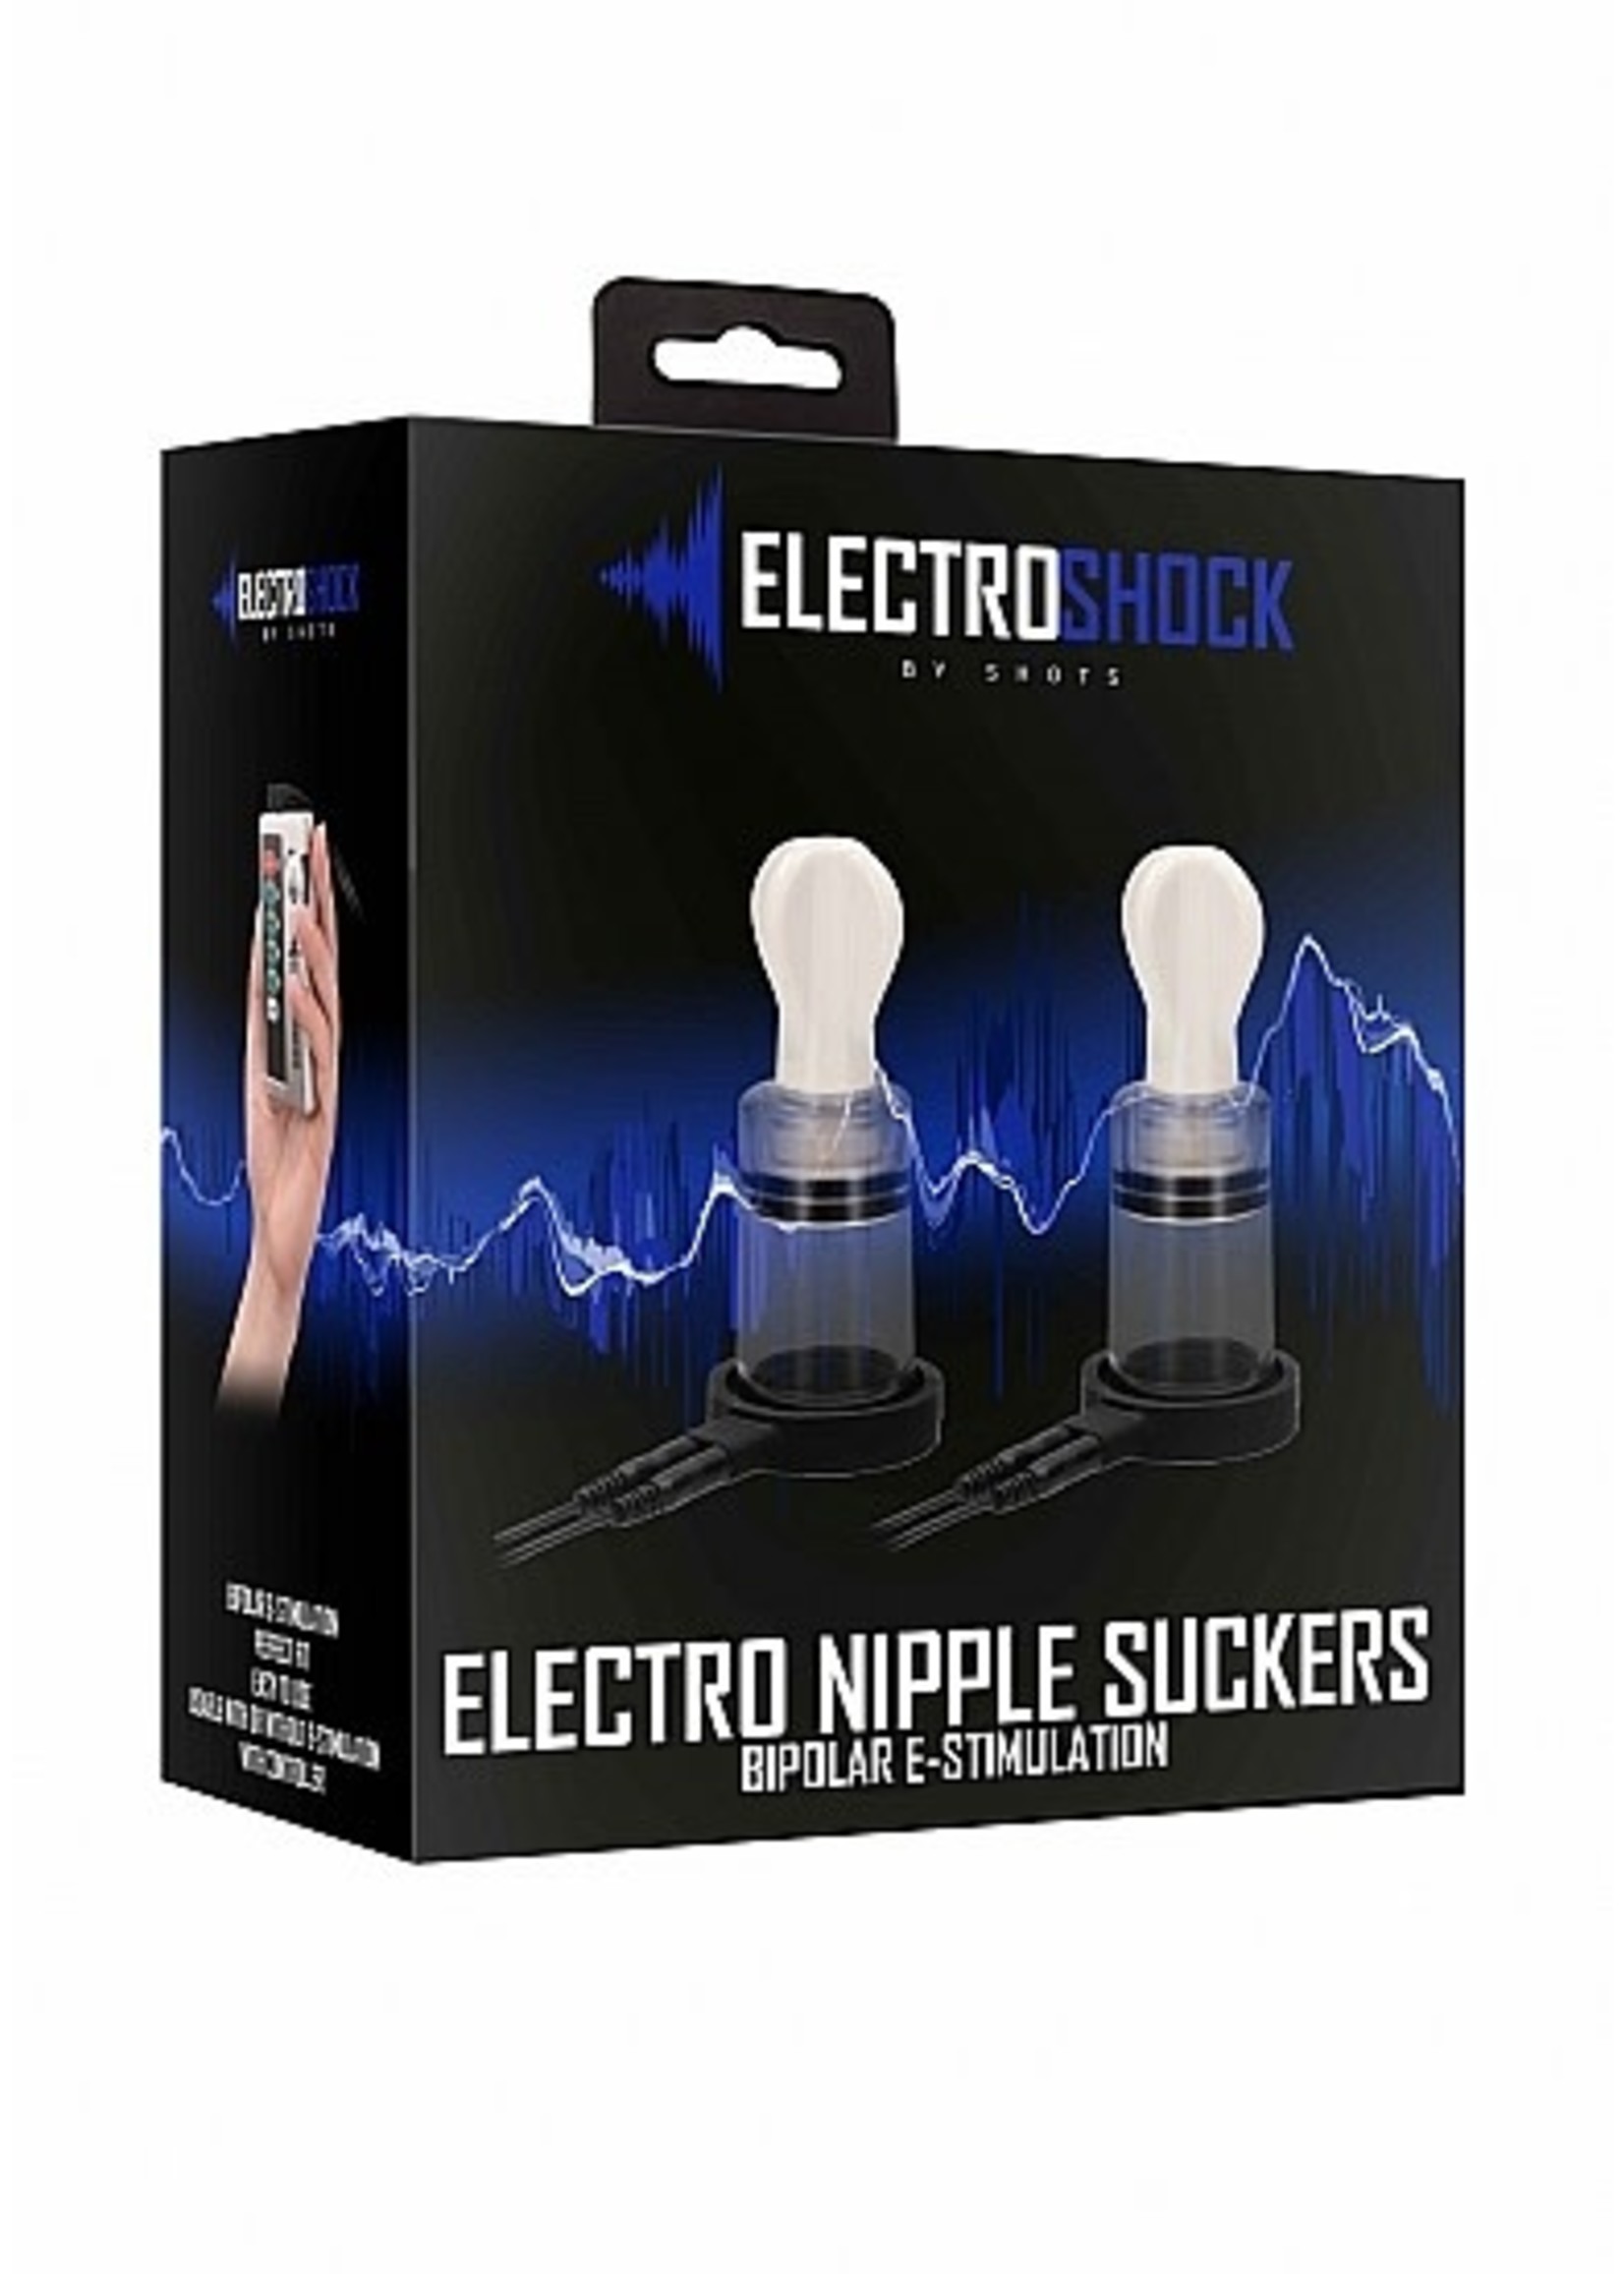 Electroshock by Shots Electro Nipple Suckers